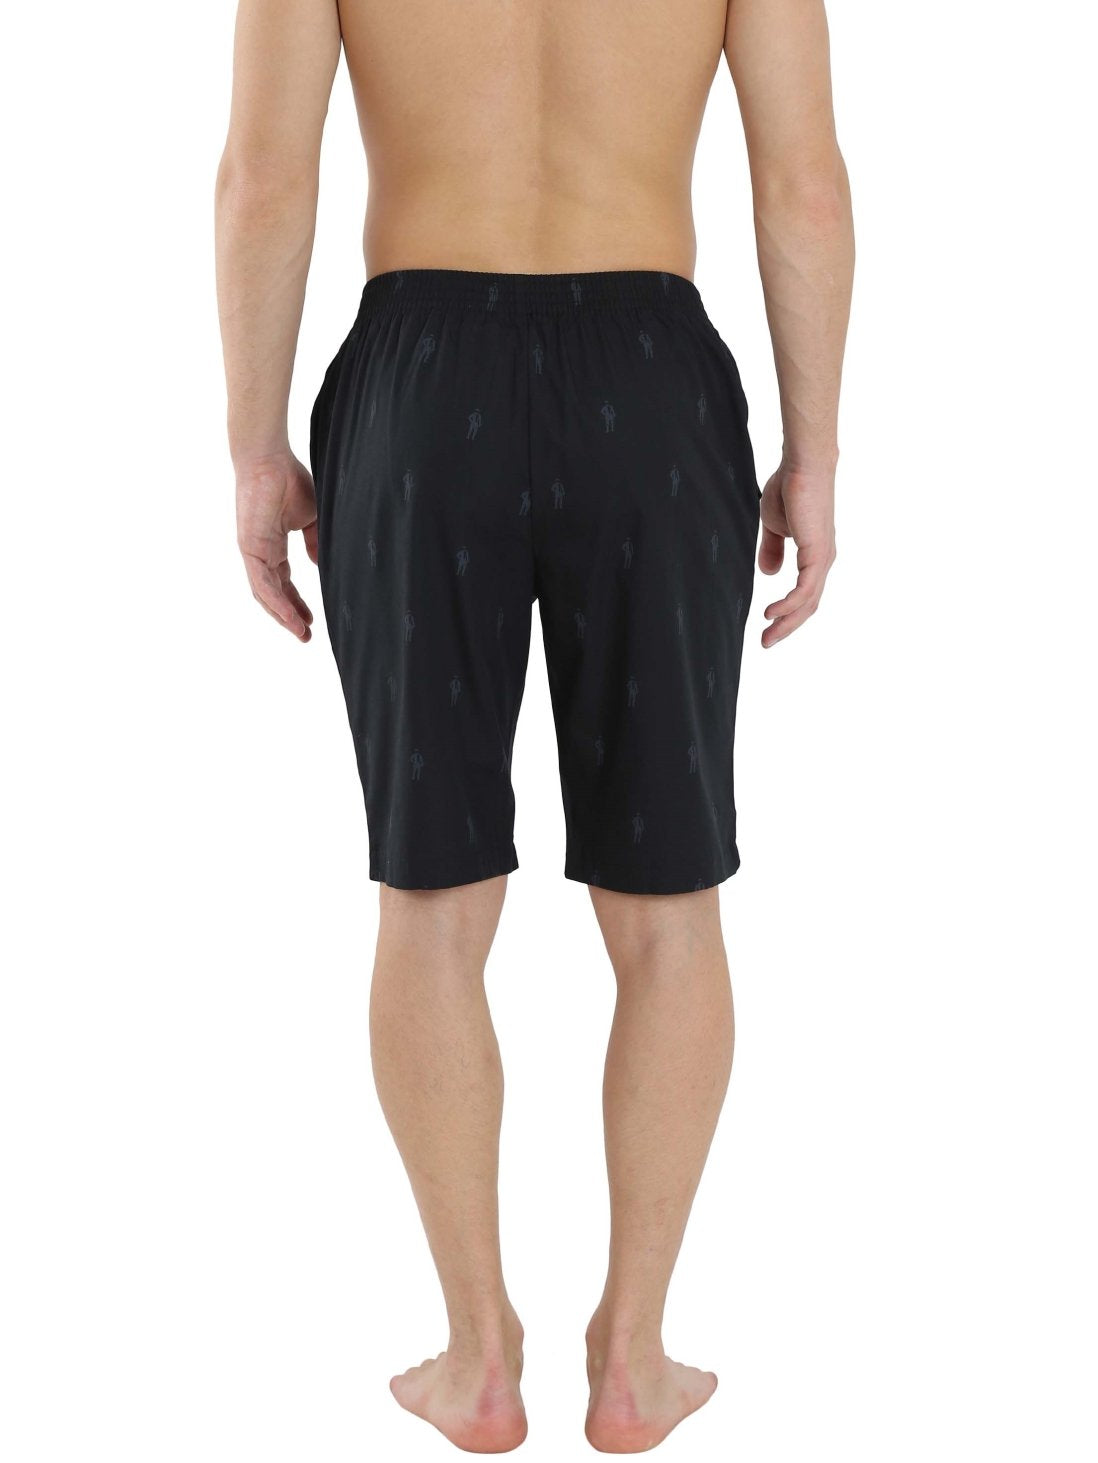 Jockey Men's Cotton Shorts (8901326151730_9005_Large_Black and Graphite)